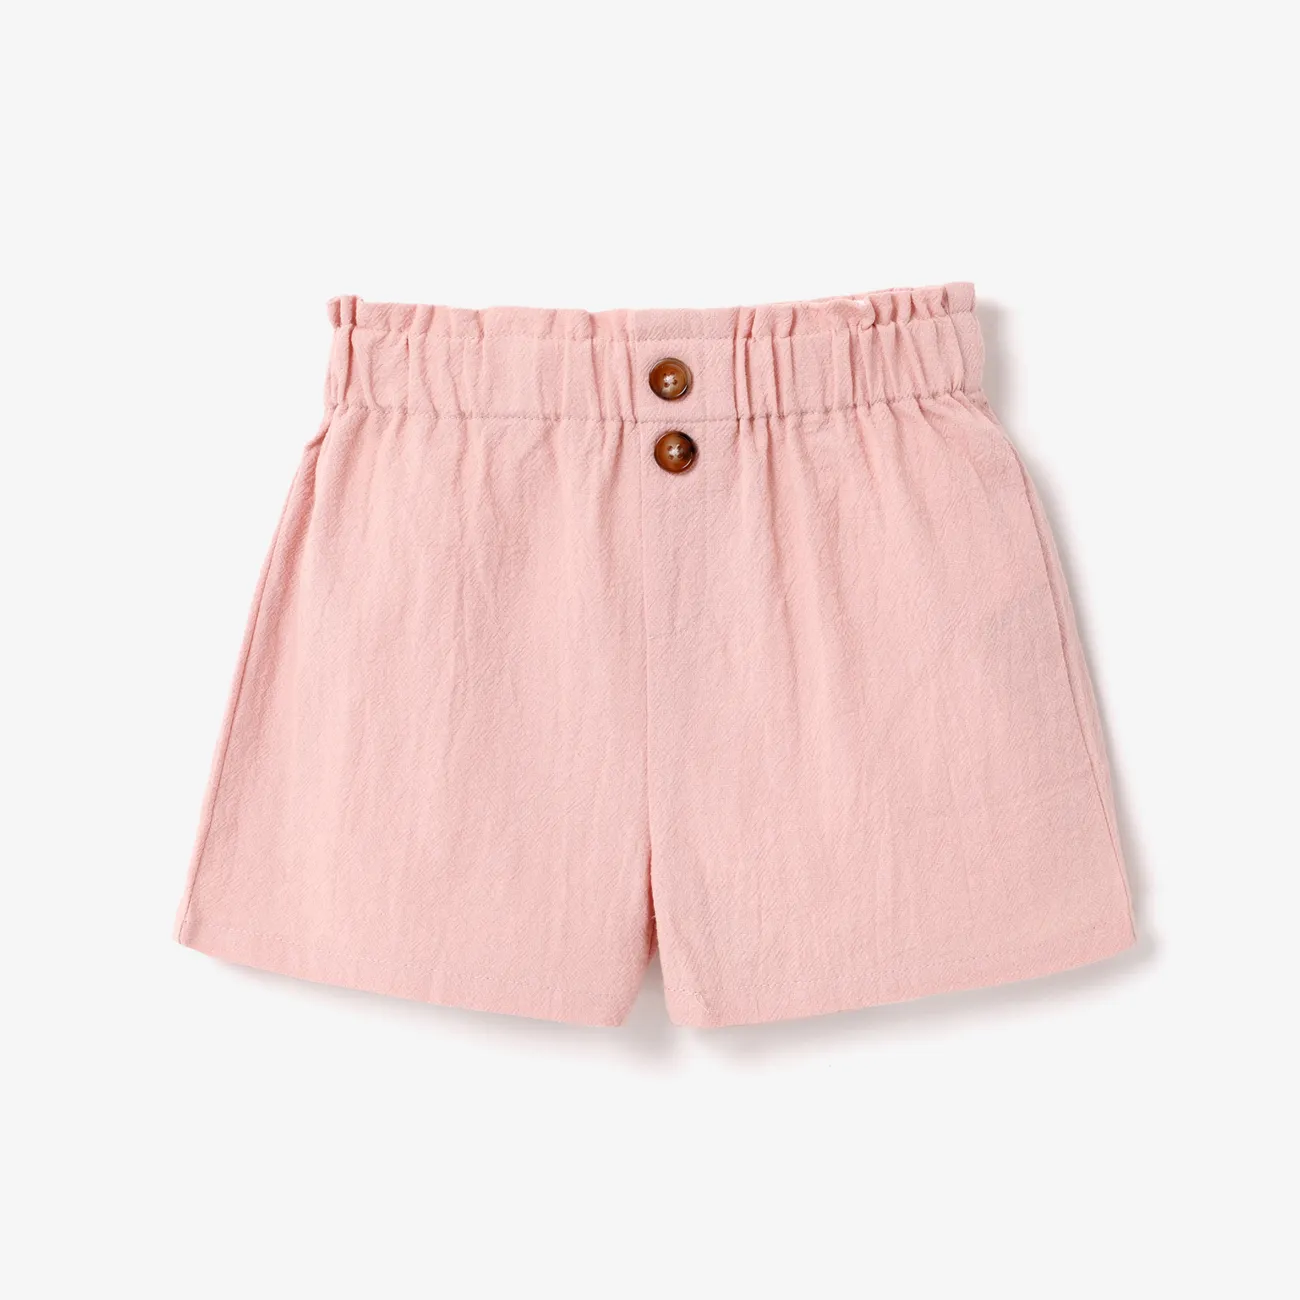 Toddler/Kid Girl 100% Cotton Solid Color Elasticized Shorts Pink big image 1